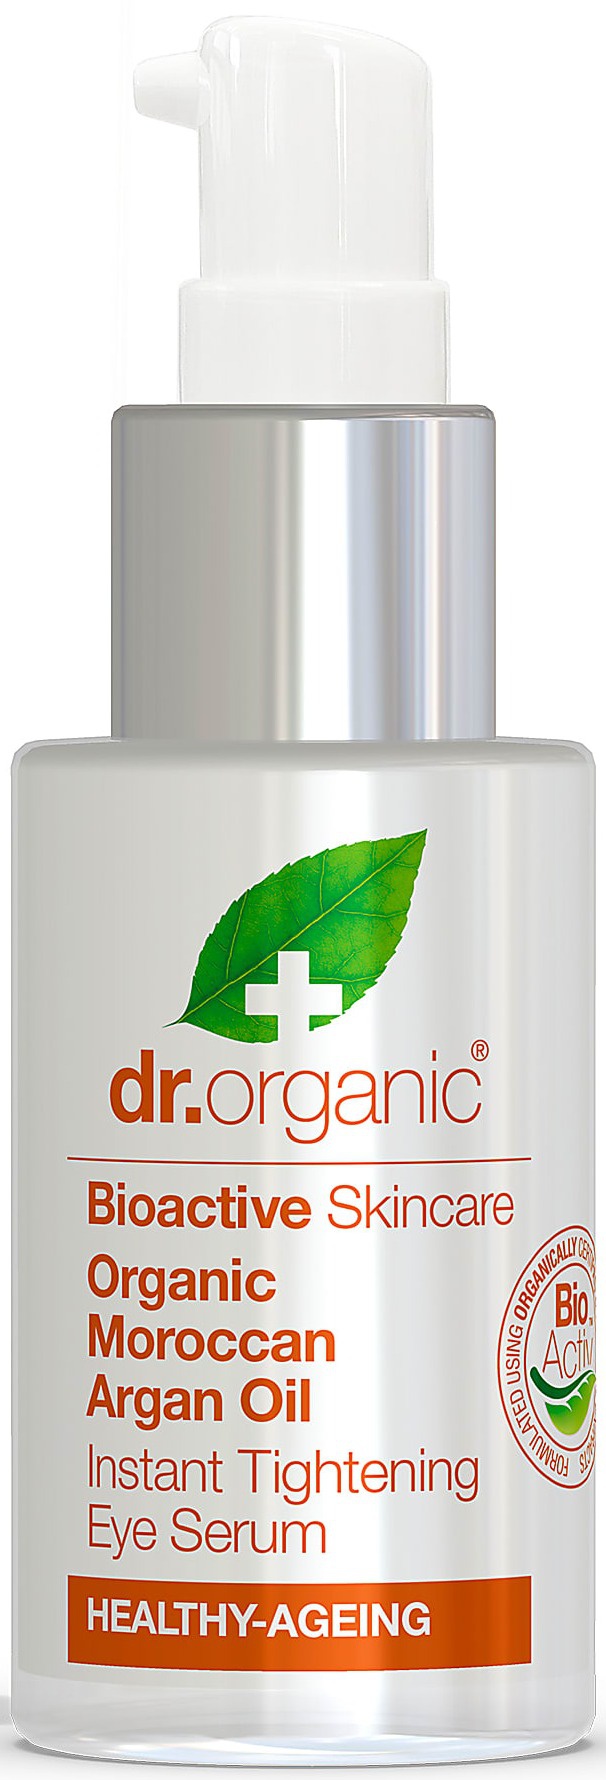 Dr Organic Moroccan Argan Oil Instant Tightening Eye Serum